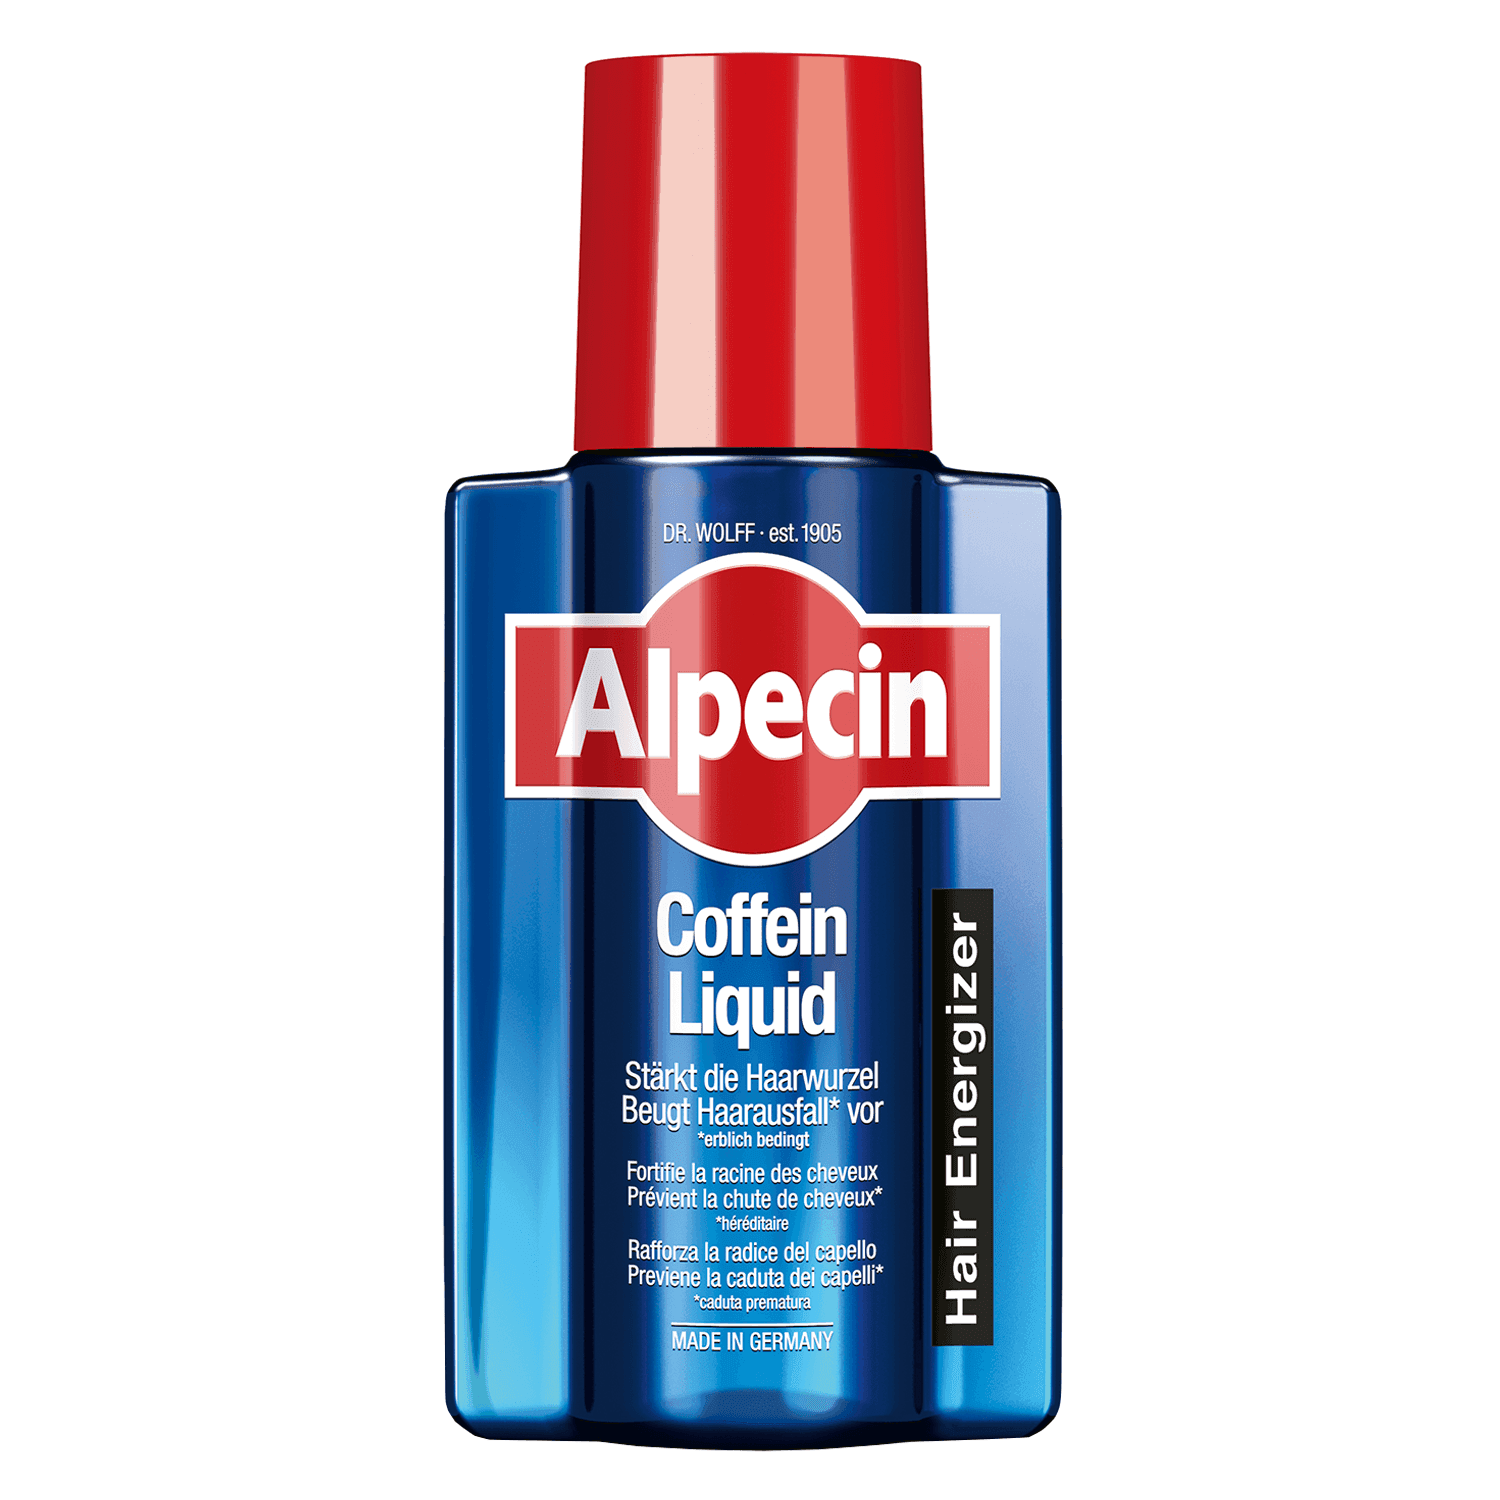 Alpecin - Coffein Liquid